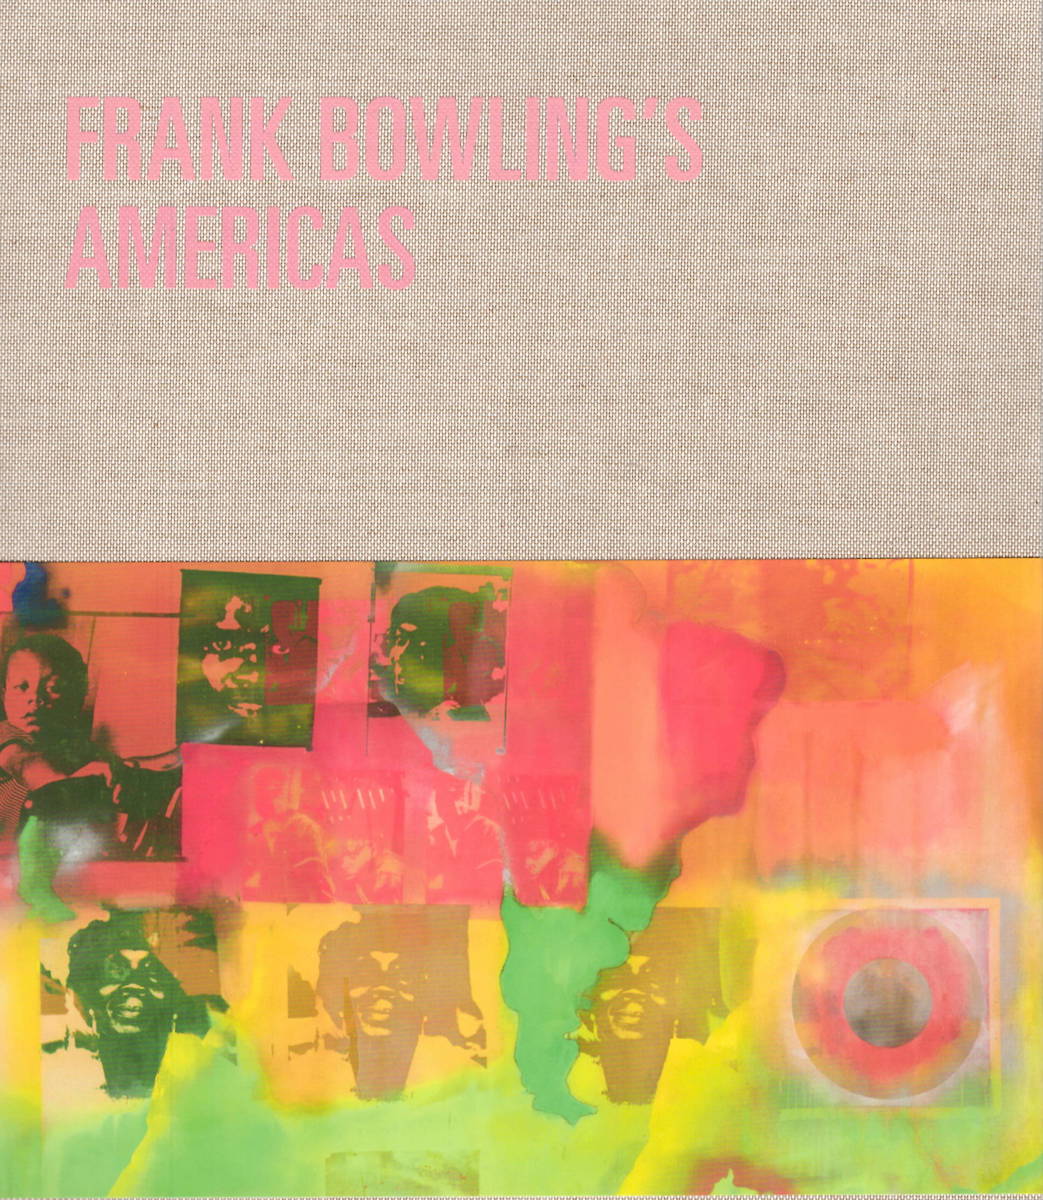 Frank Bowling's Americas